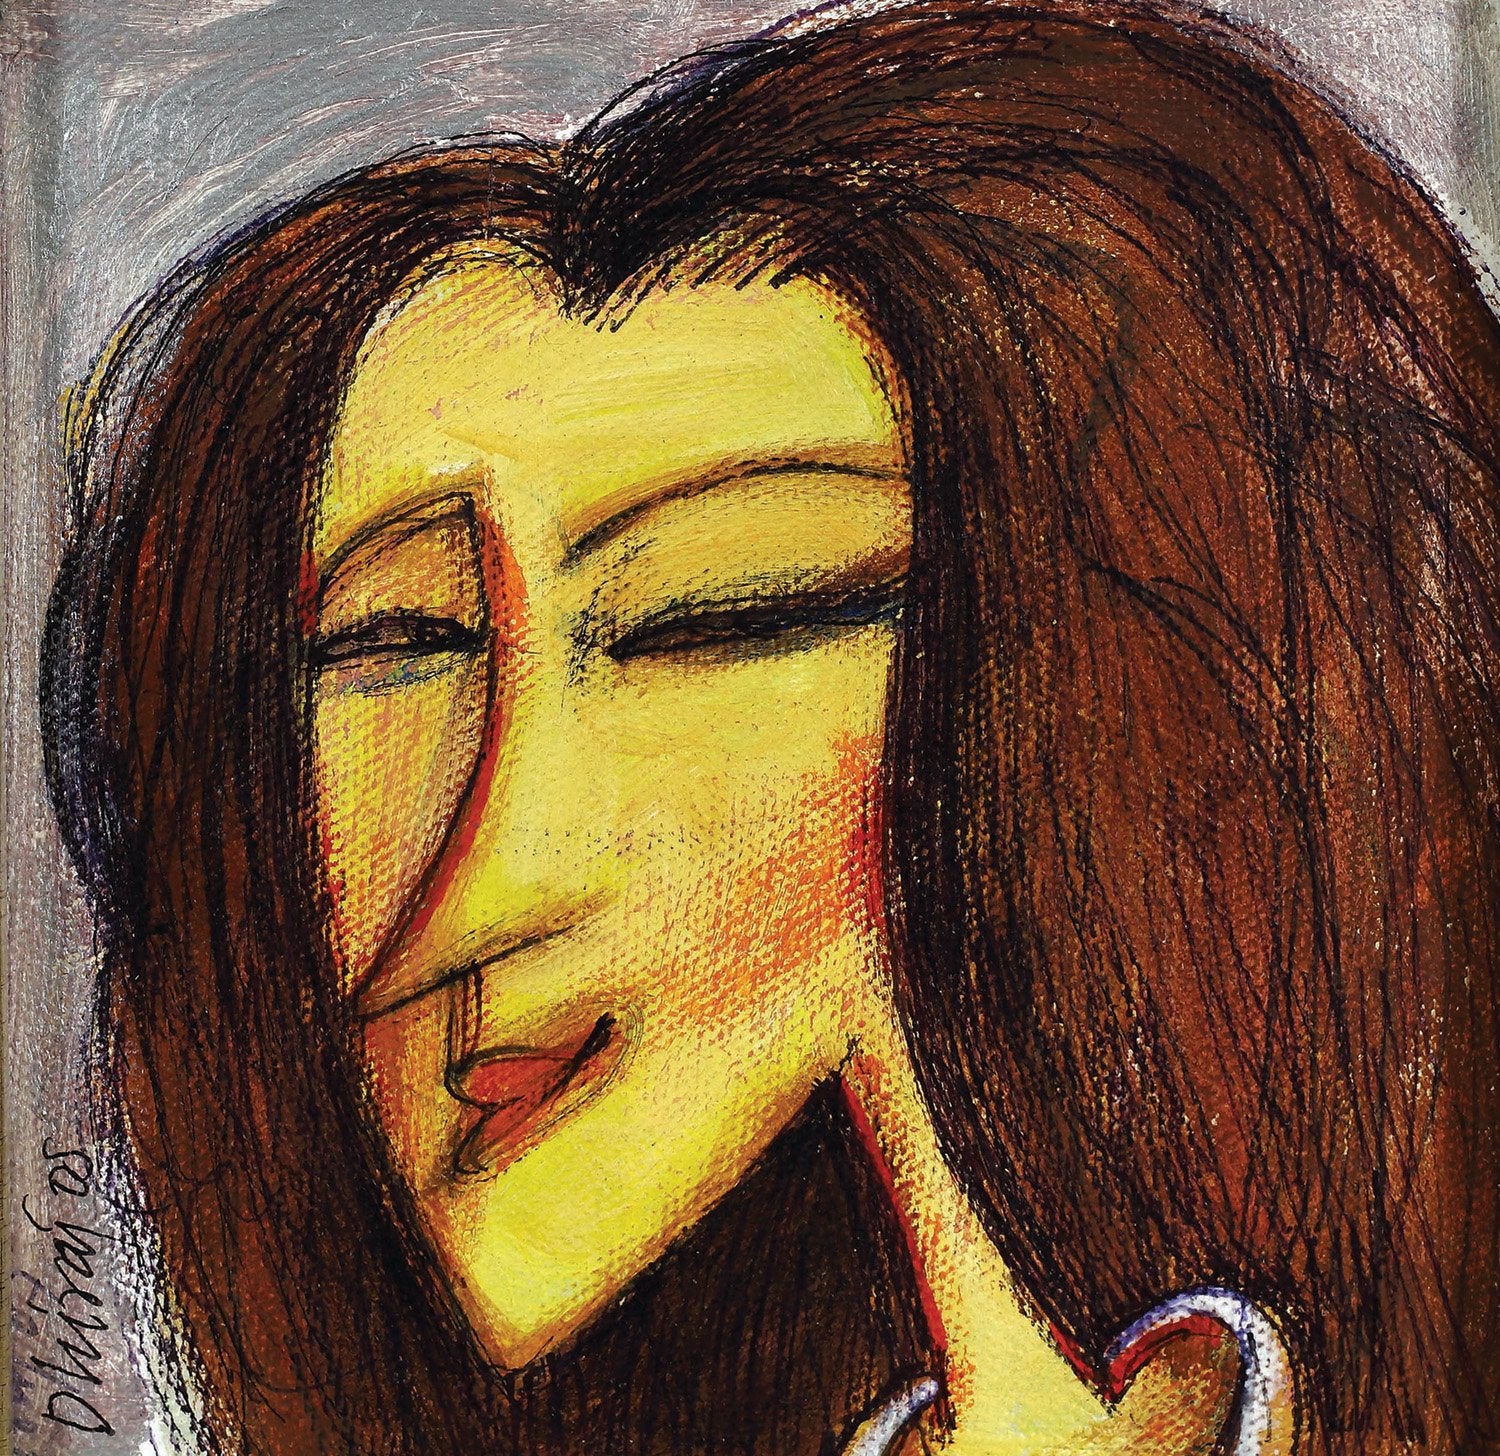 My Mona Lisa|Dhiraj Choudhury- Acrylic on canvas, 2005, 5 x 5 inches